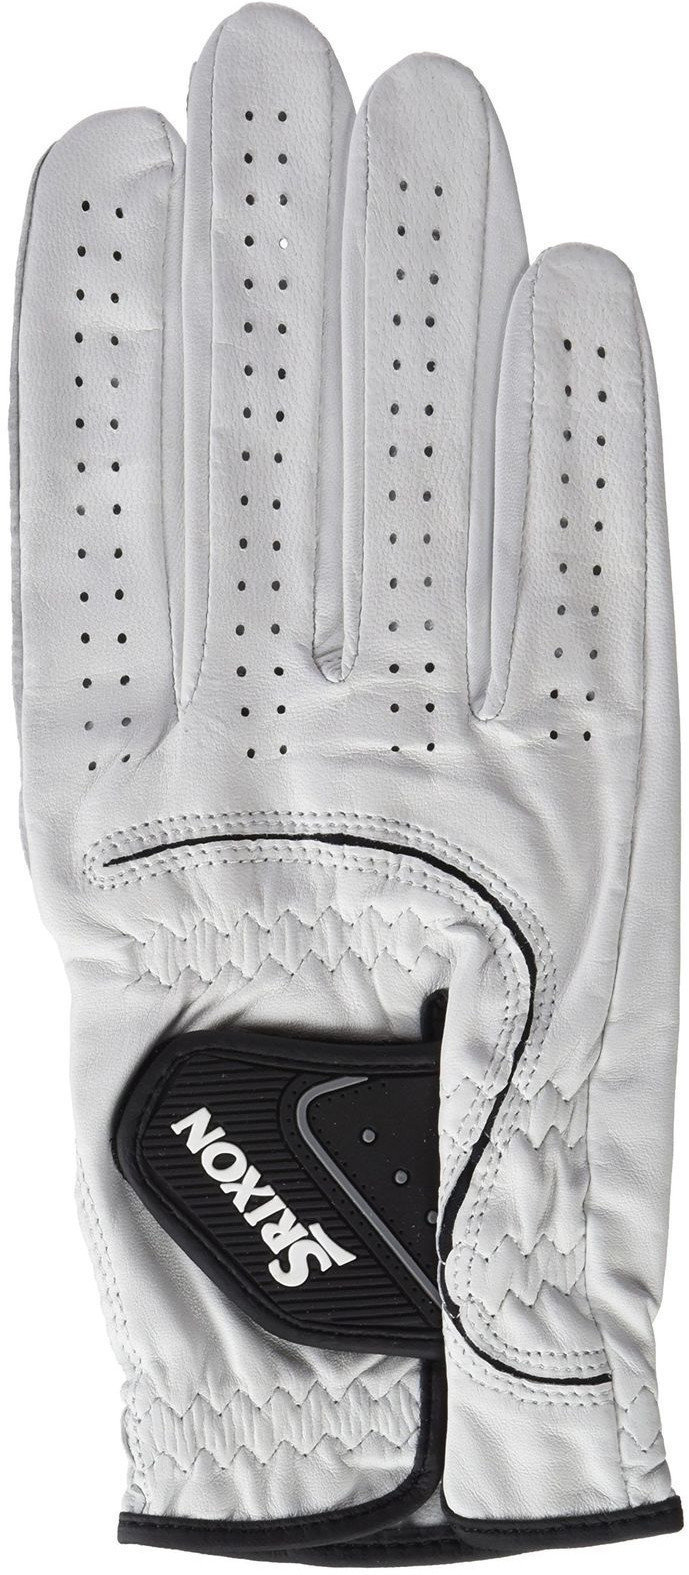 Gloves Srixon Leather Glove Wht M